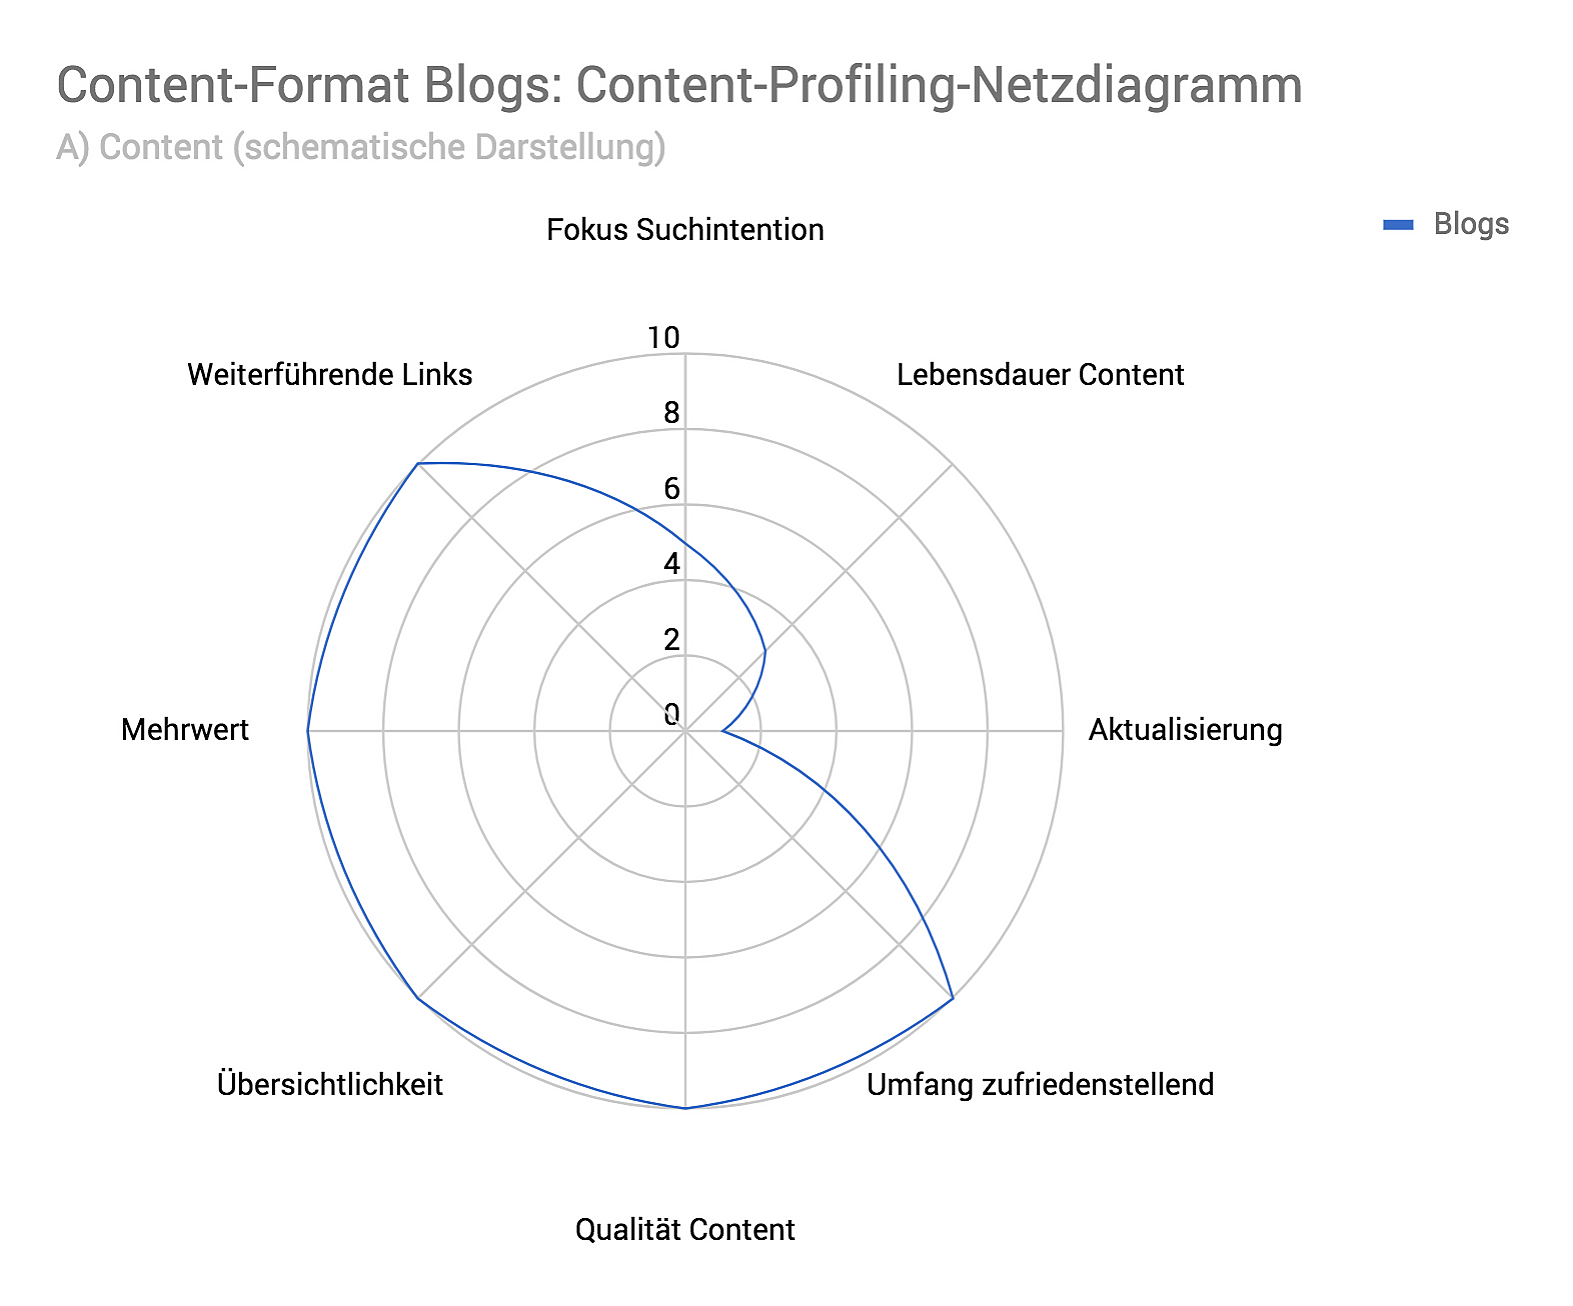 Netzdiagramm Content-Format Blogs